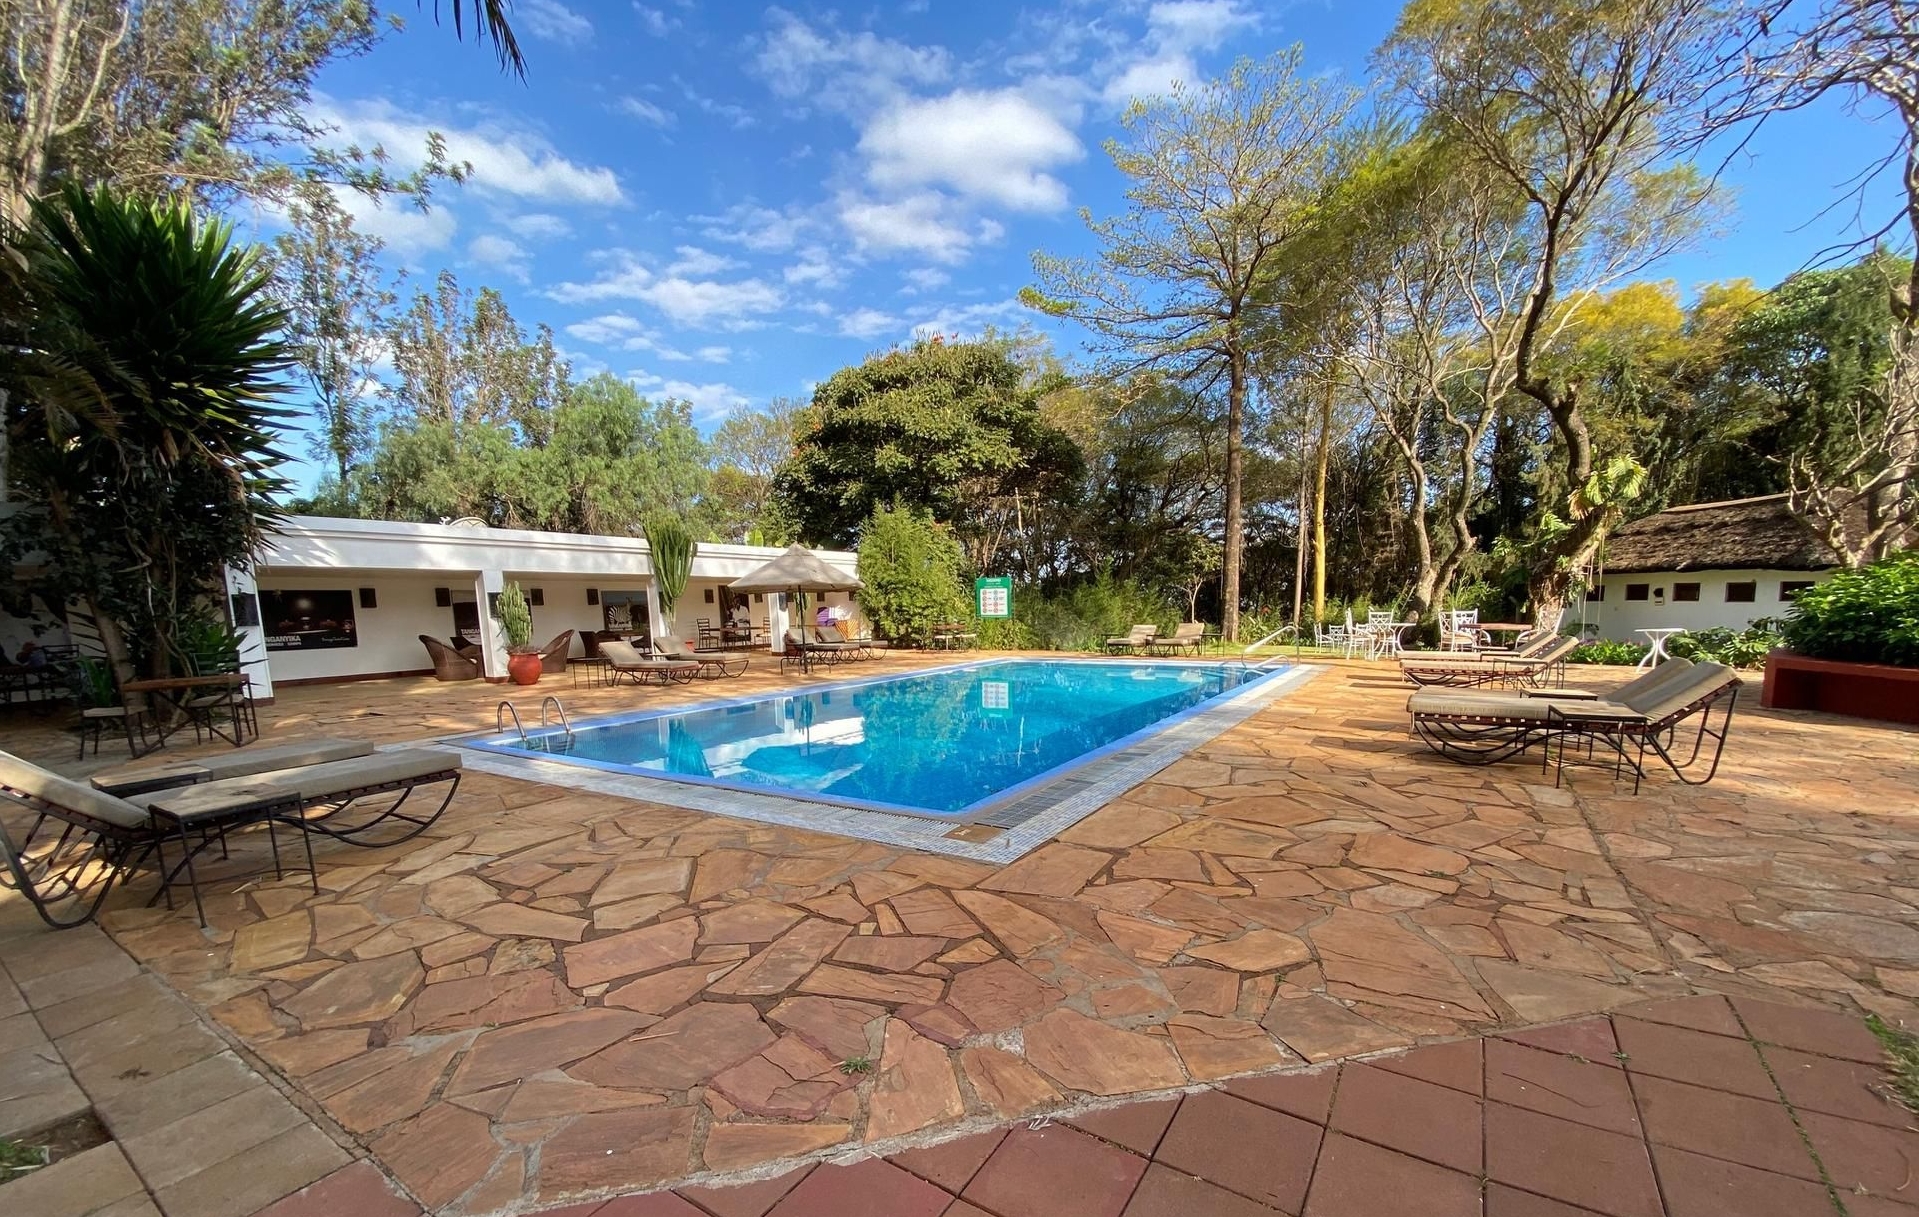 Ngorongoro Farm House Pool